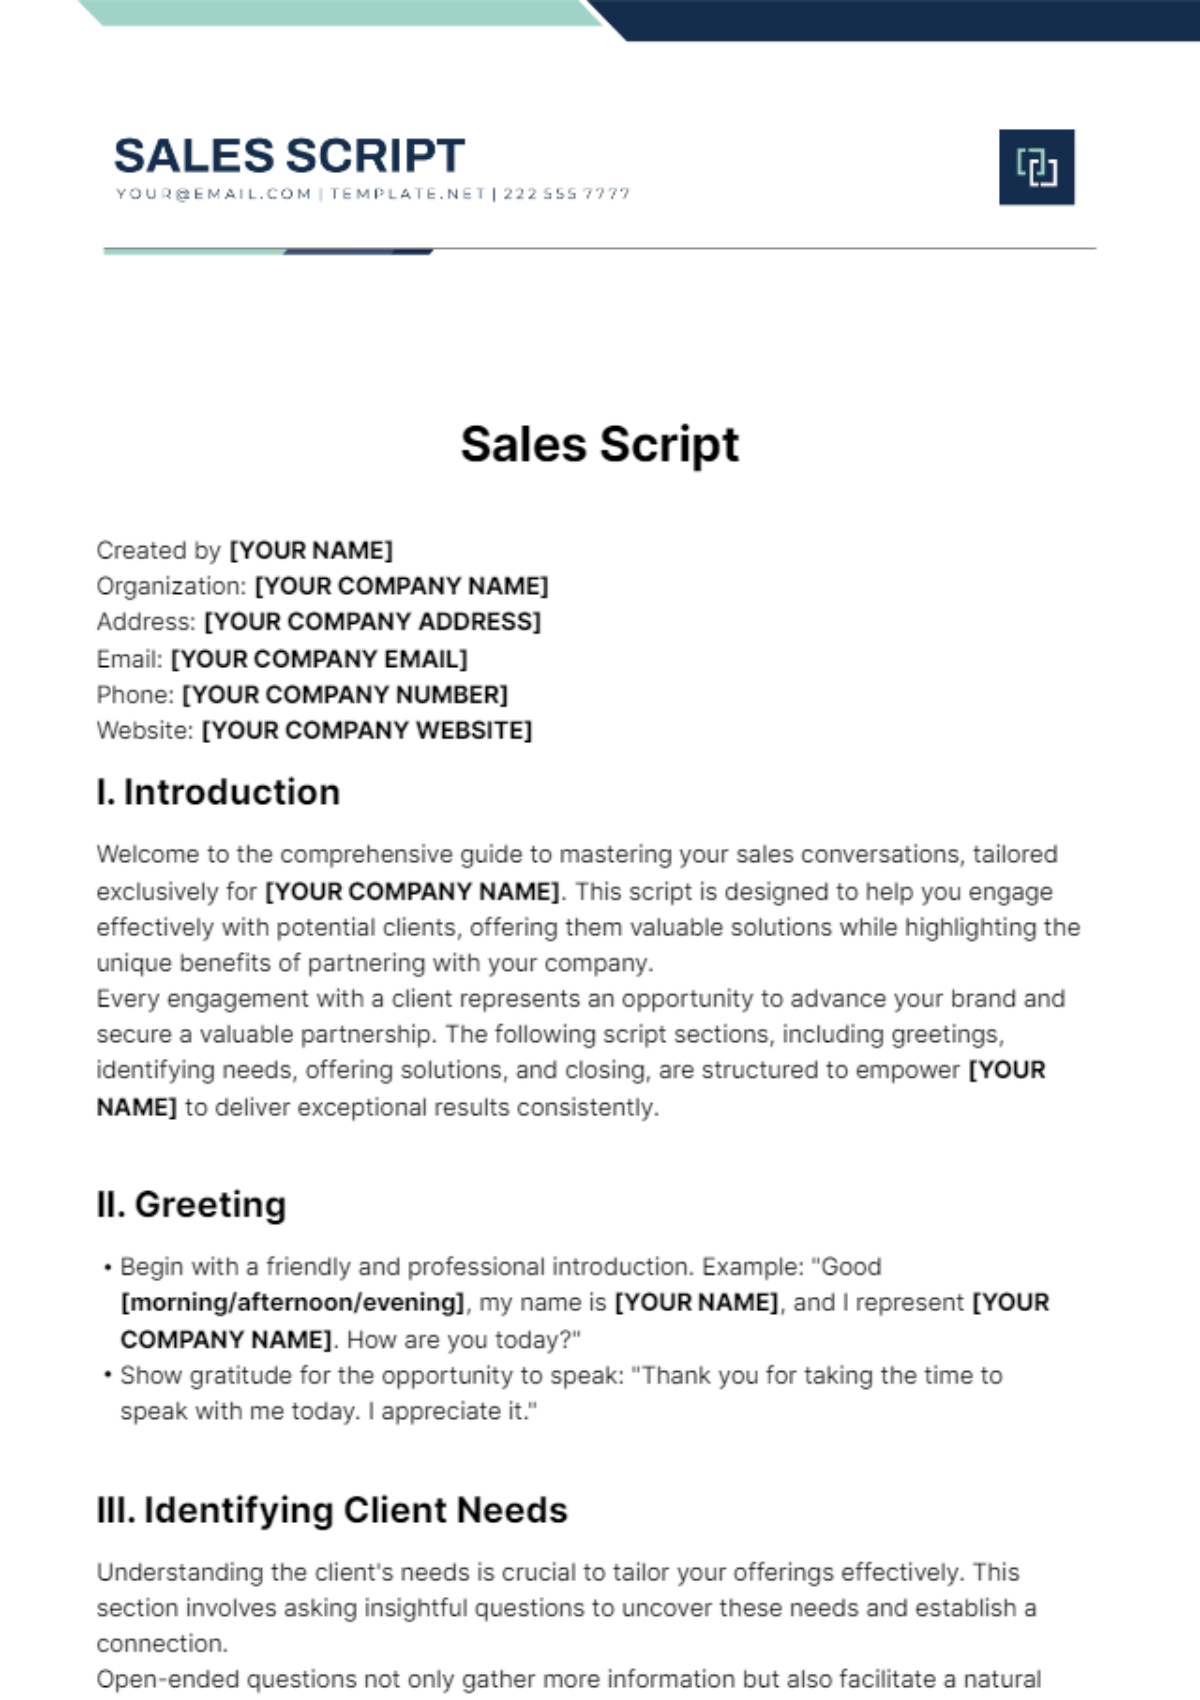 Sales Script Template